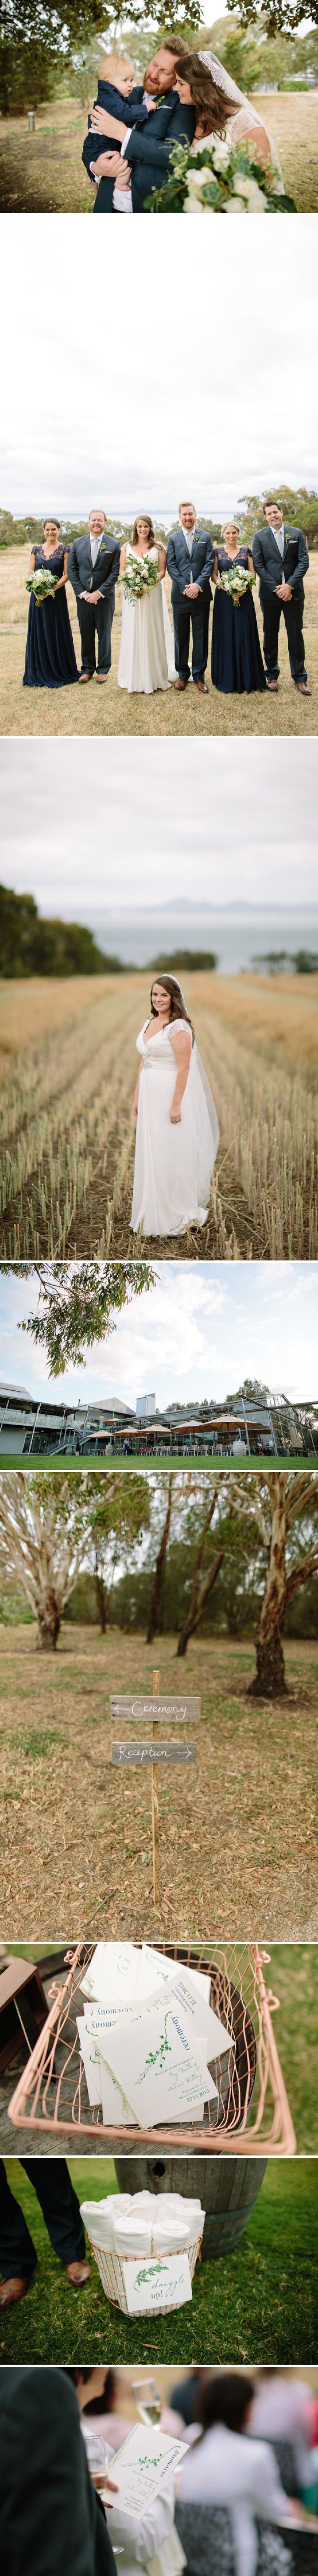 Modern Winery Wedding in Australia | Beacon Lane Real Weddings